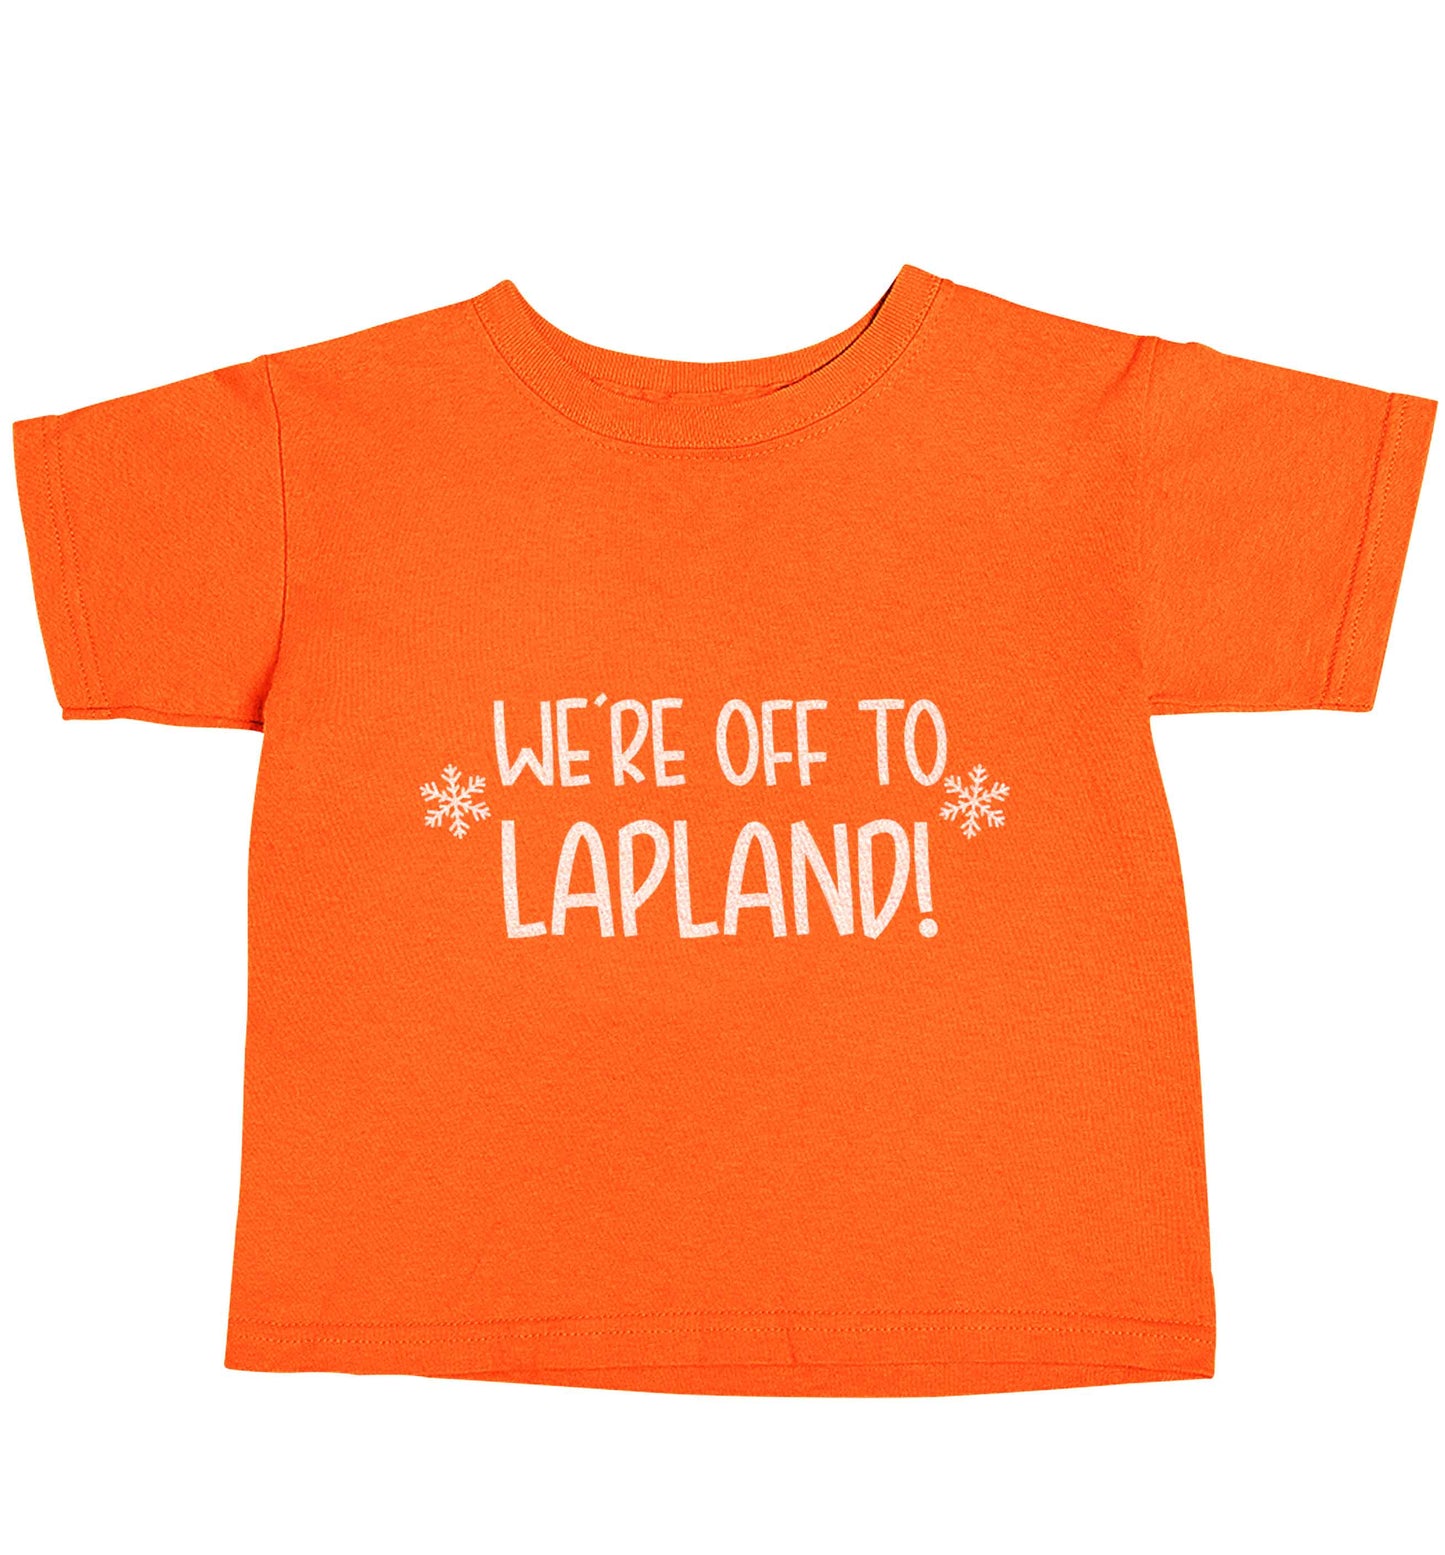 We're off to Lapland orange baby toddler Tshirt 2 Years